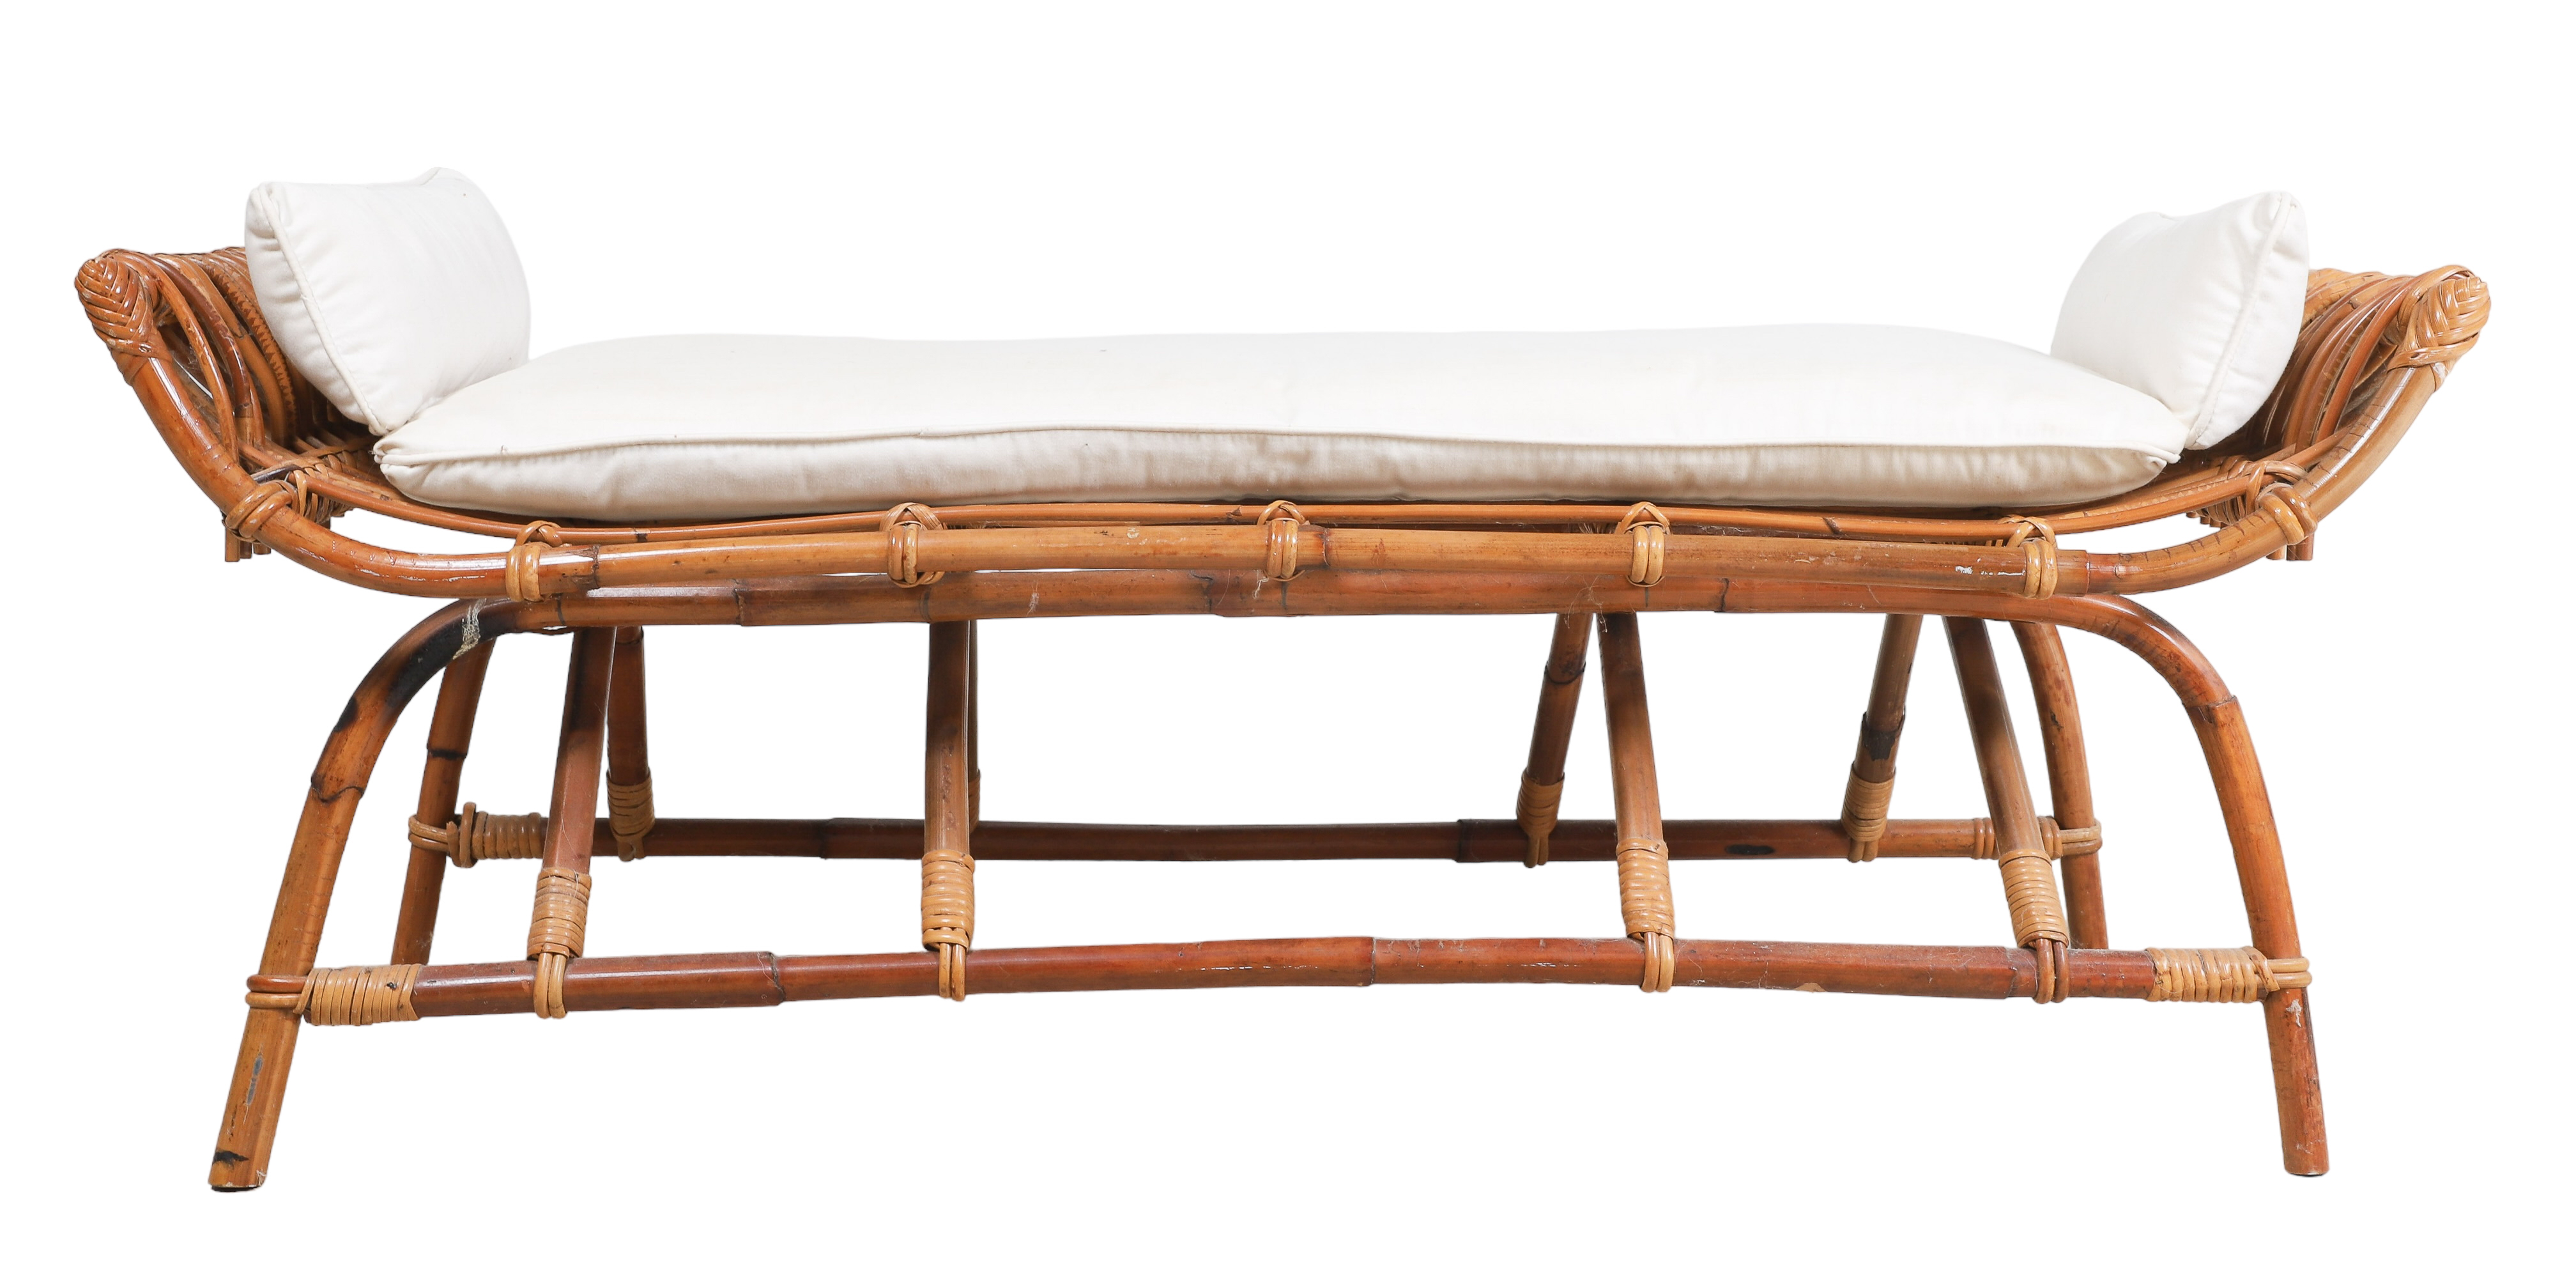 Bamboo bench, white upholstered